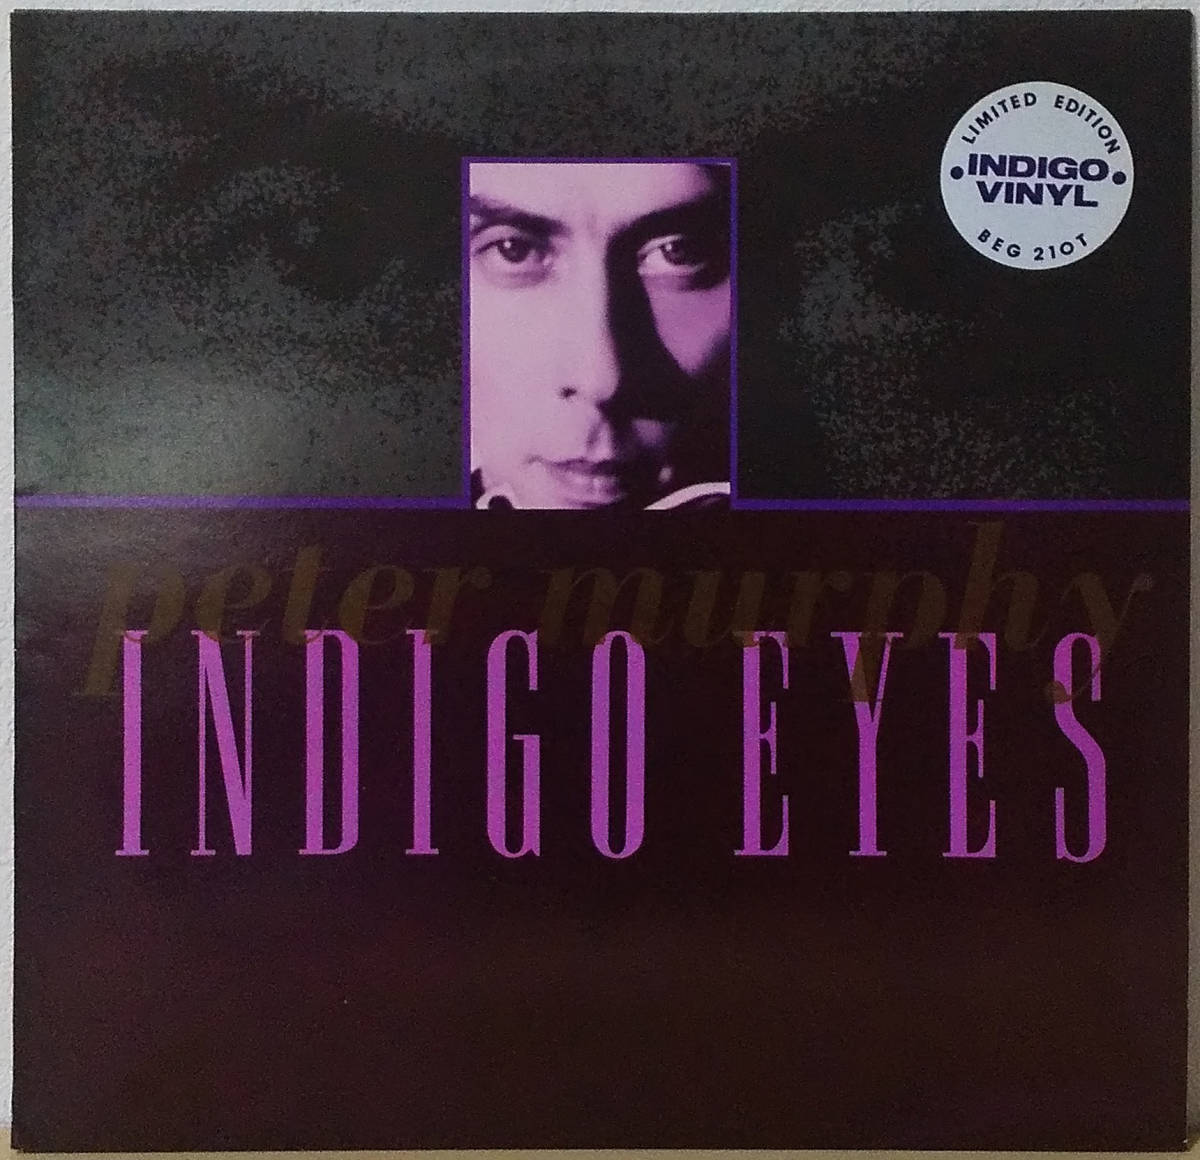 Peter Murphy - [限定] Indigo Eyes UK盤 12inch,Ltd Edition Indigo BEG 210T 1988年 BAUHAUS, Love And Rockets, Peter Murphy, David J_画像1